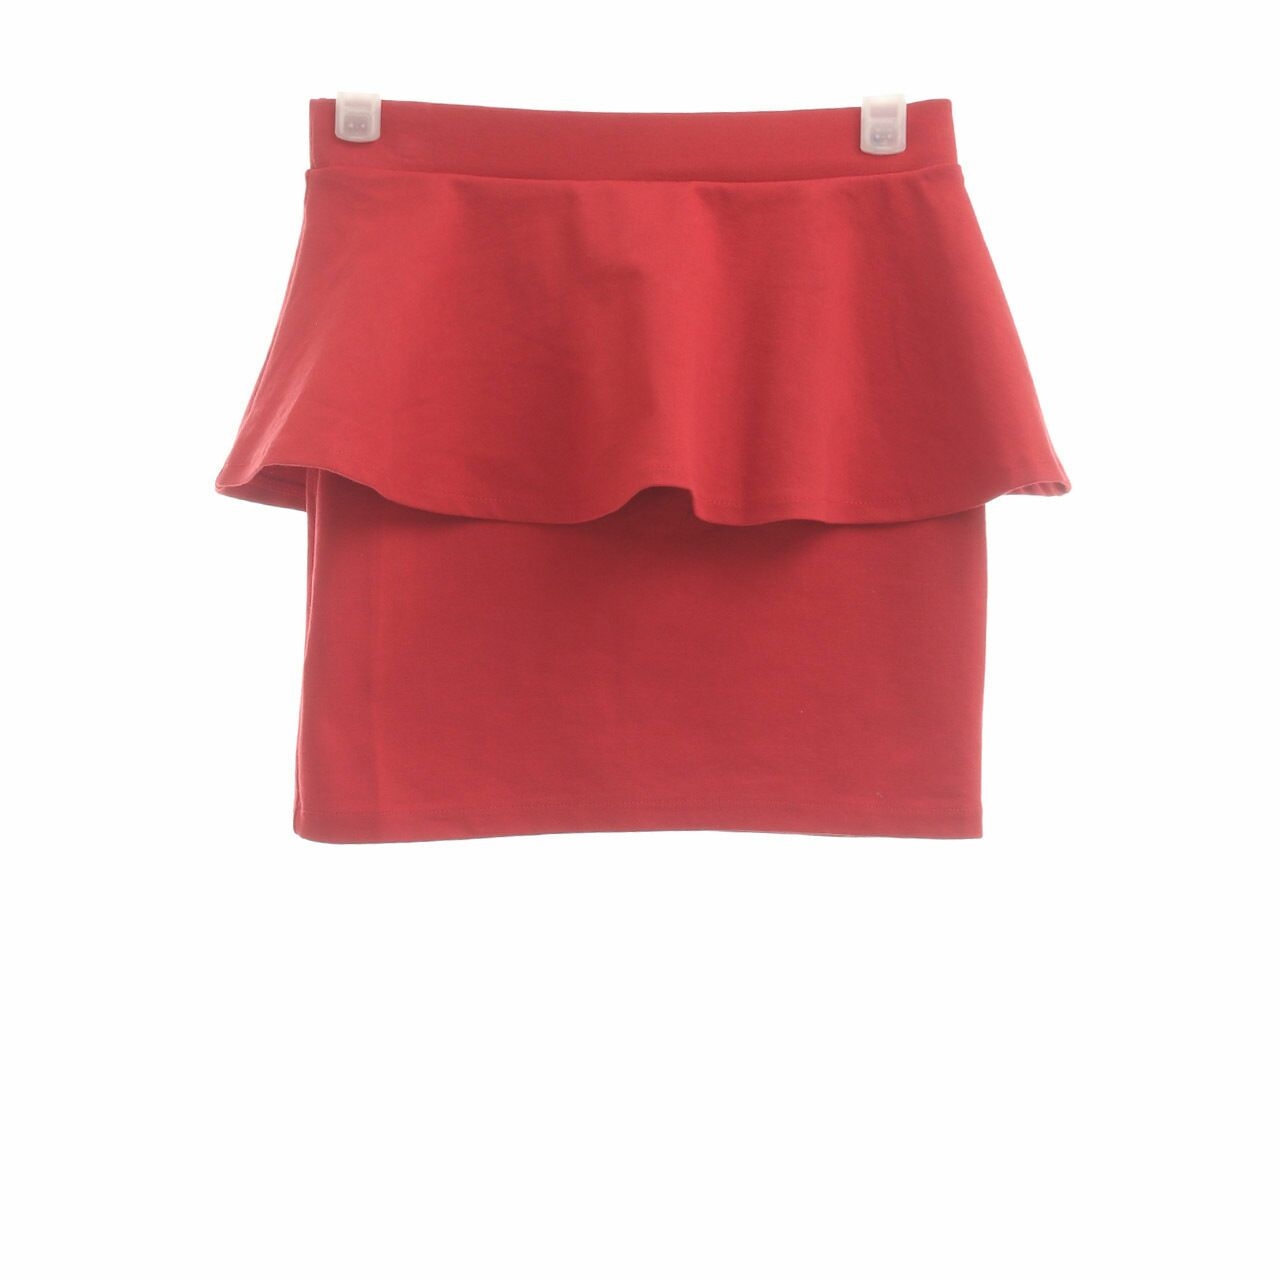 Zara Red Rok Mini